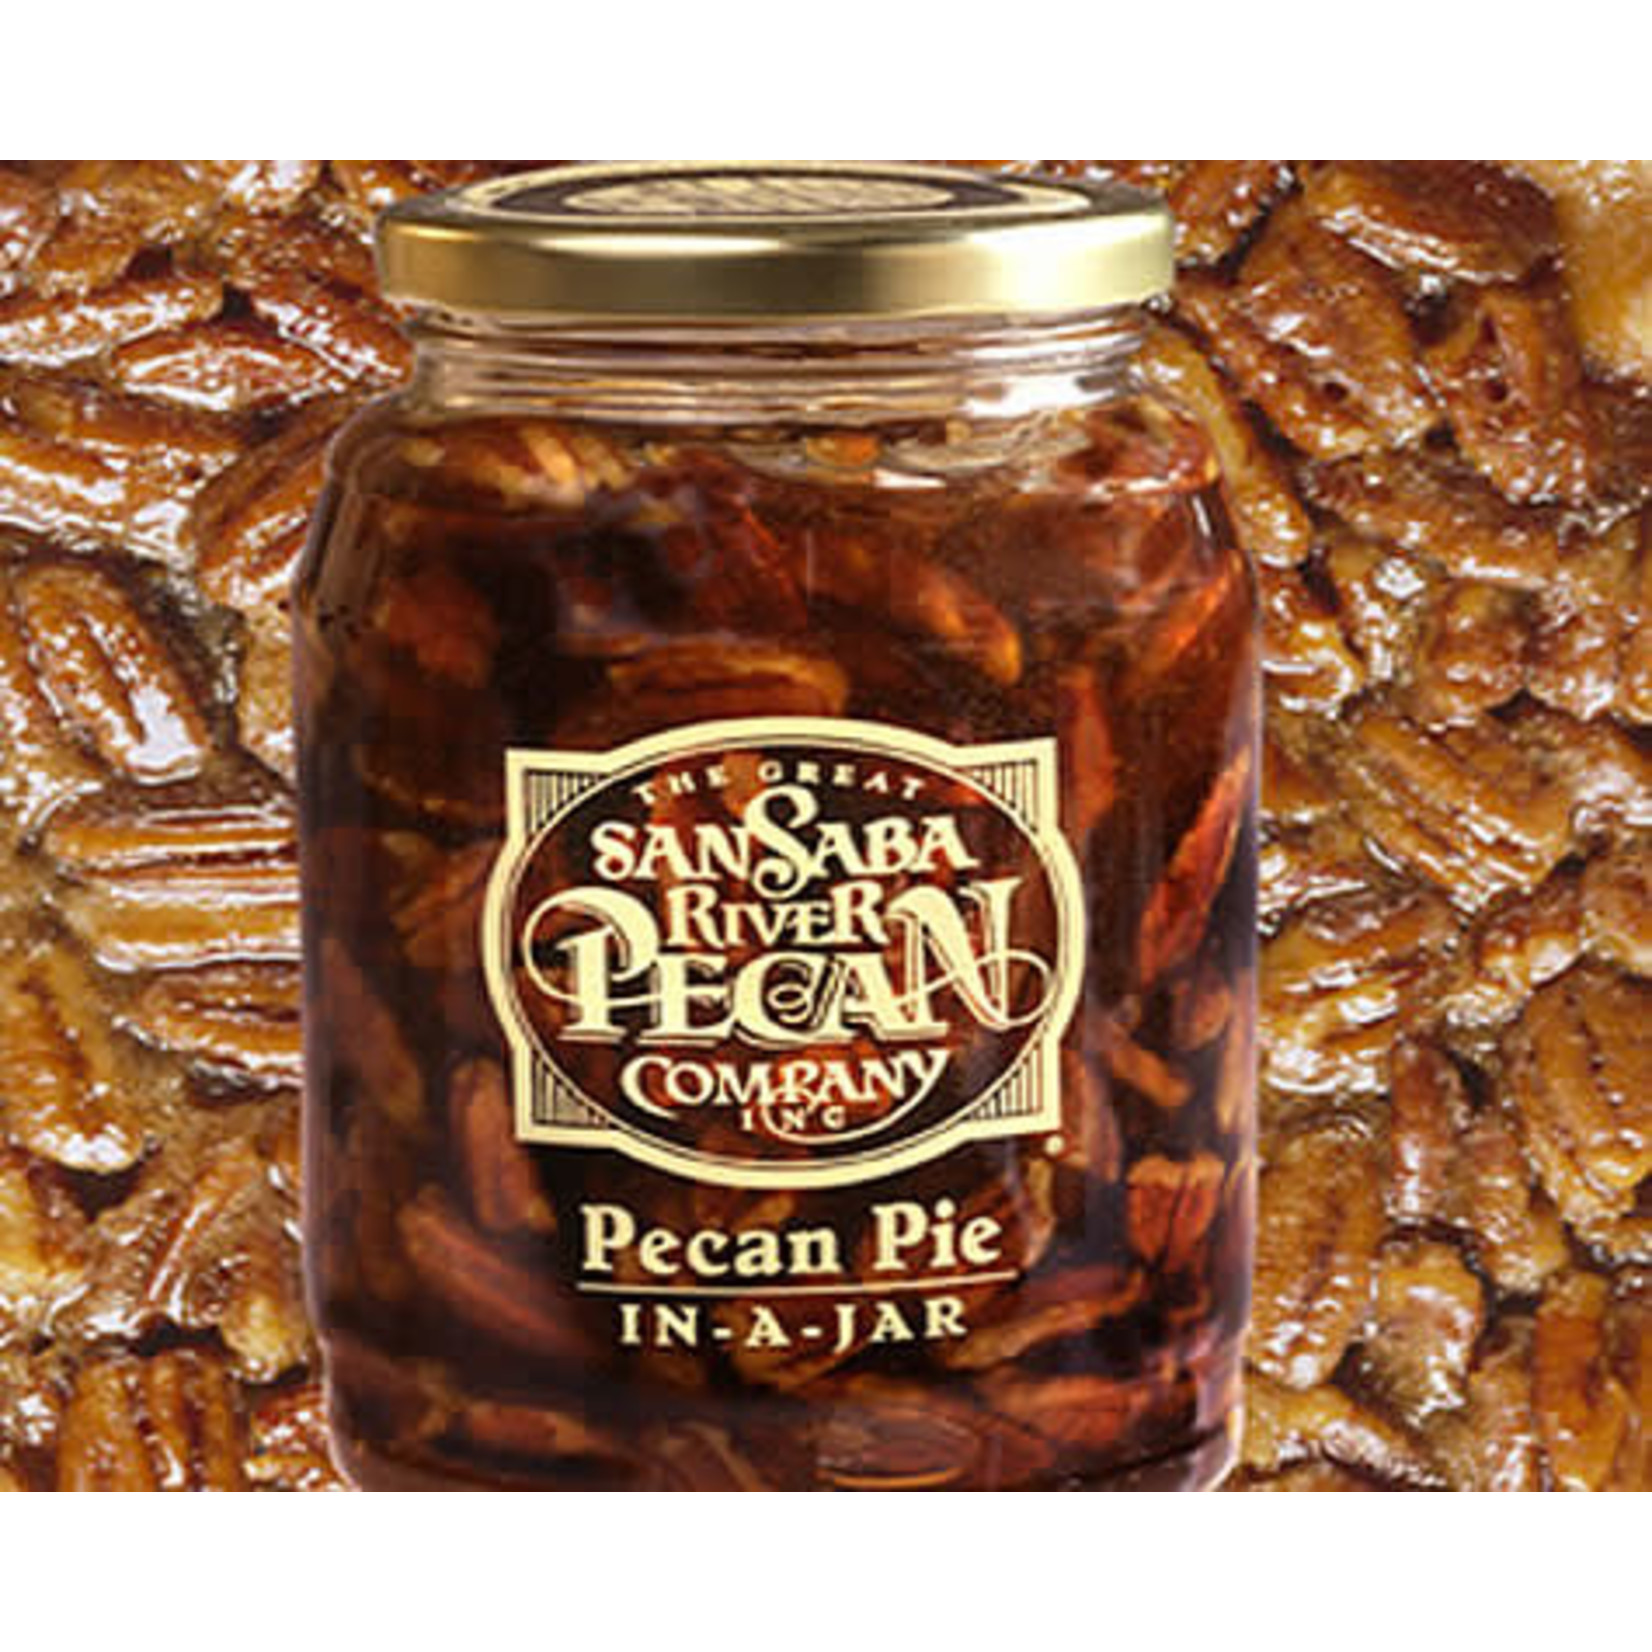 Pecan Pie in a Jar